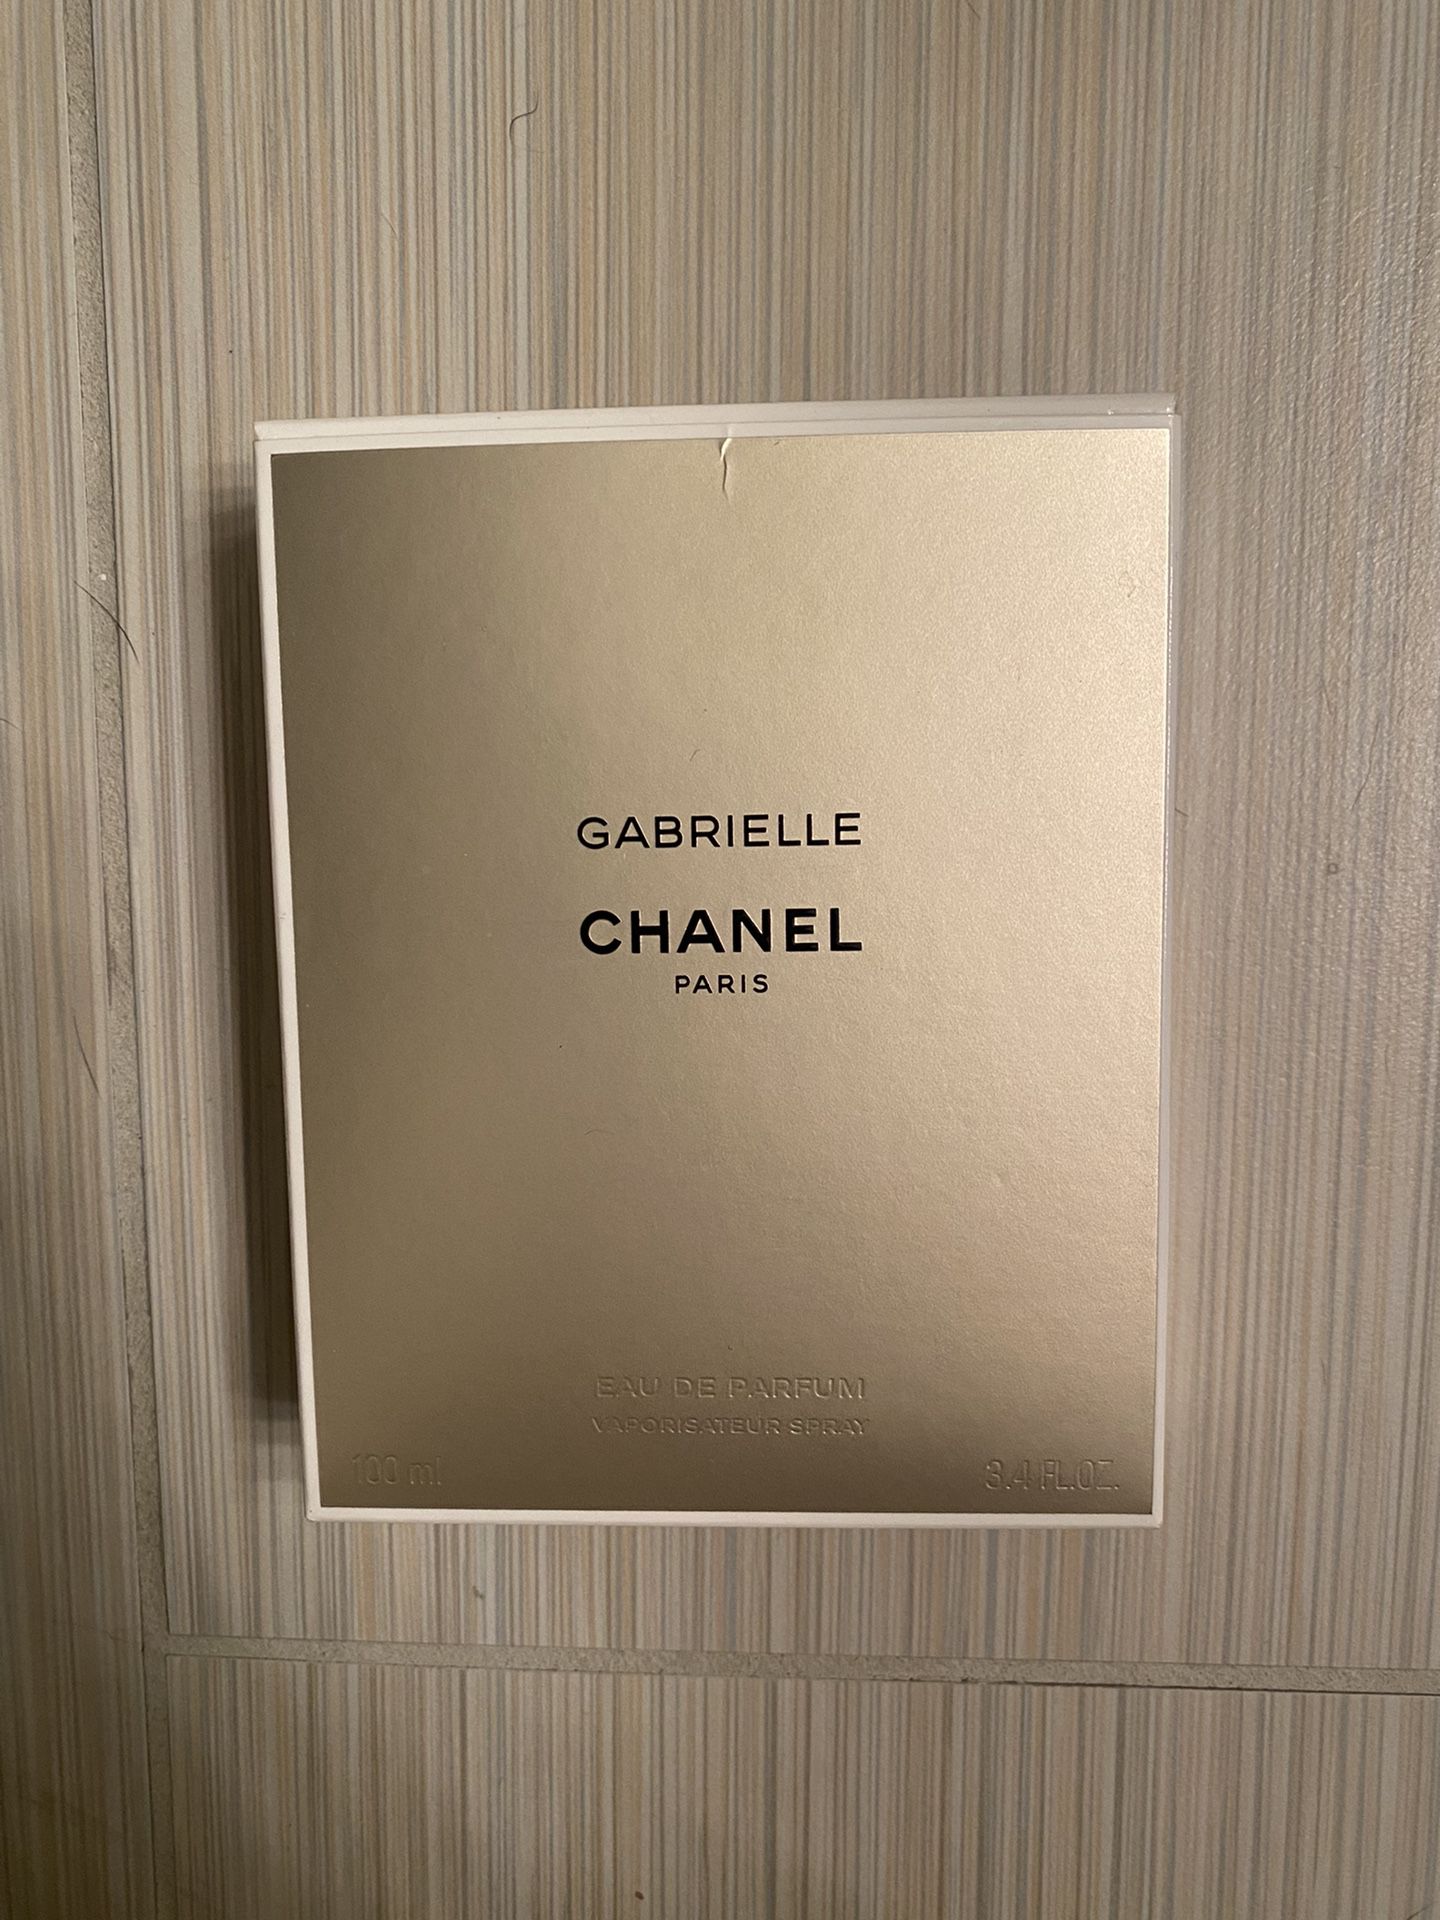 NEW Gabrielle Chanel Perfume